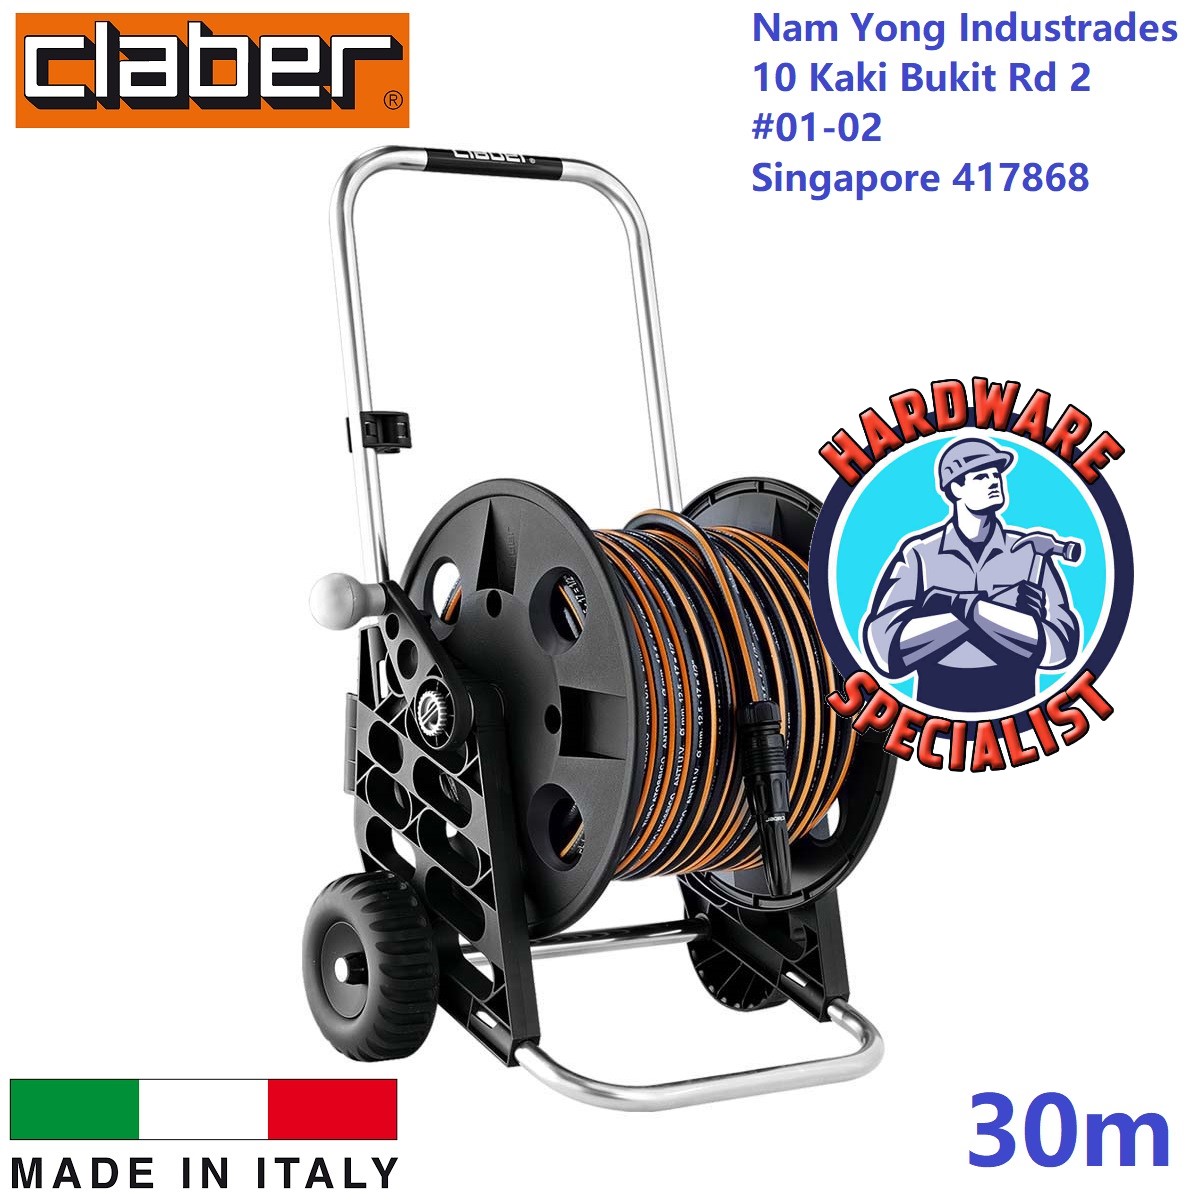 Claber 8864 Kit Pronto 30m Water Hose Reel / Garden Hose Reel